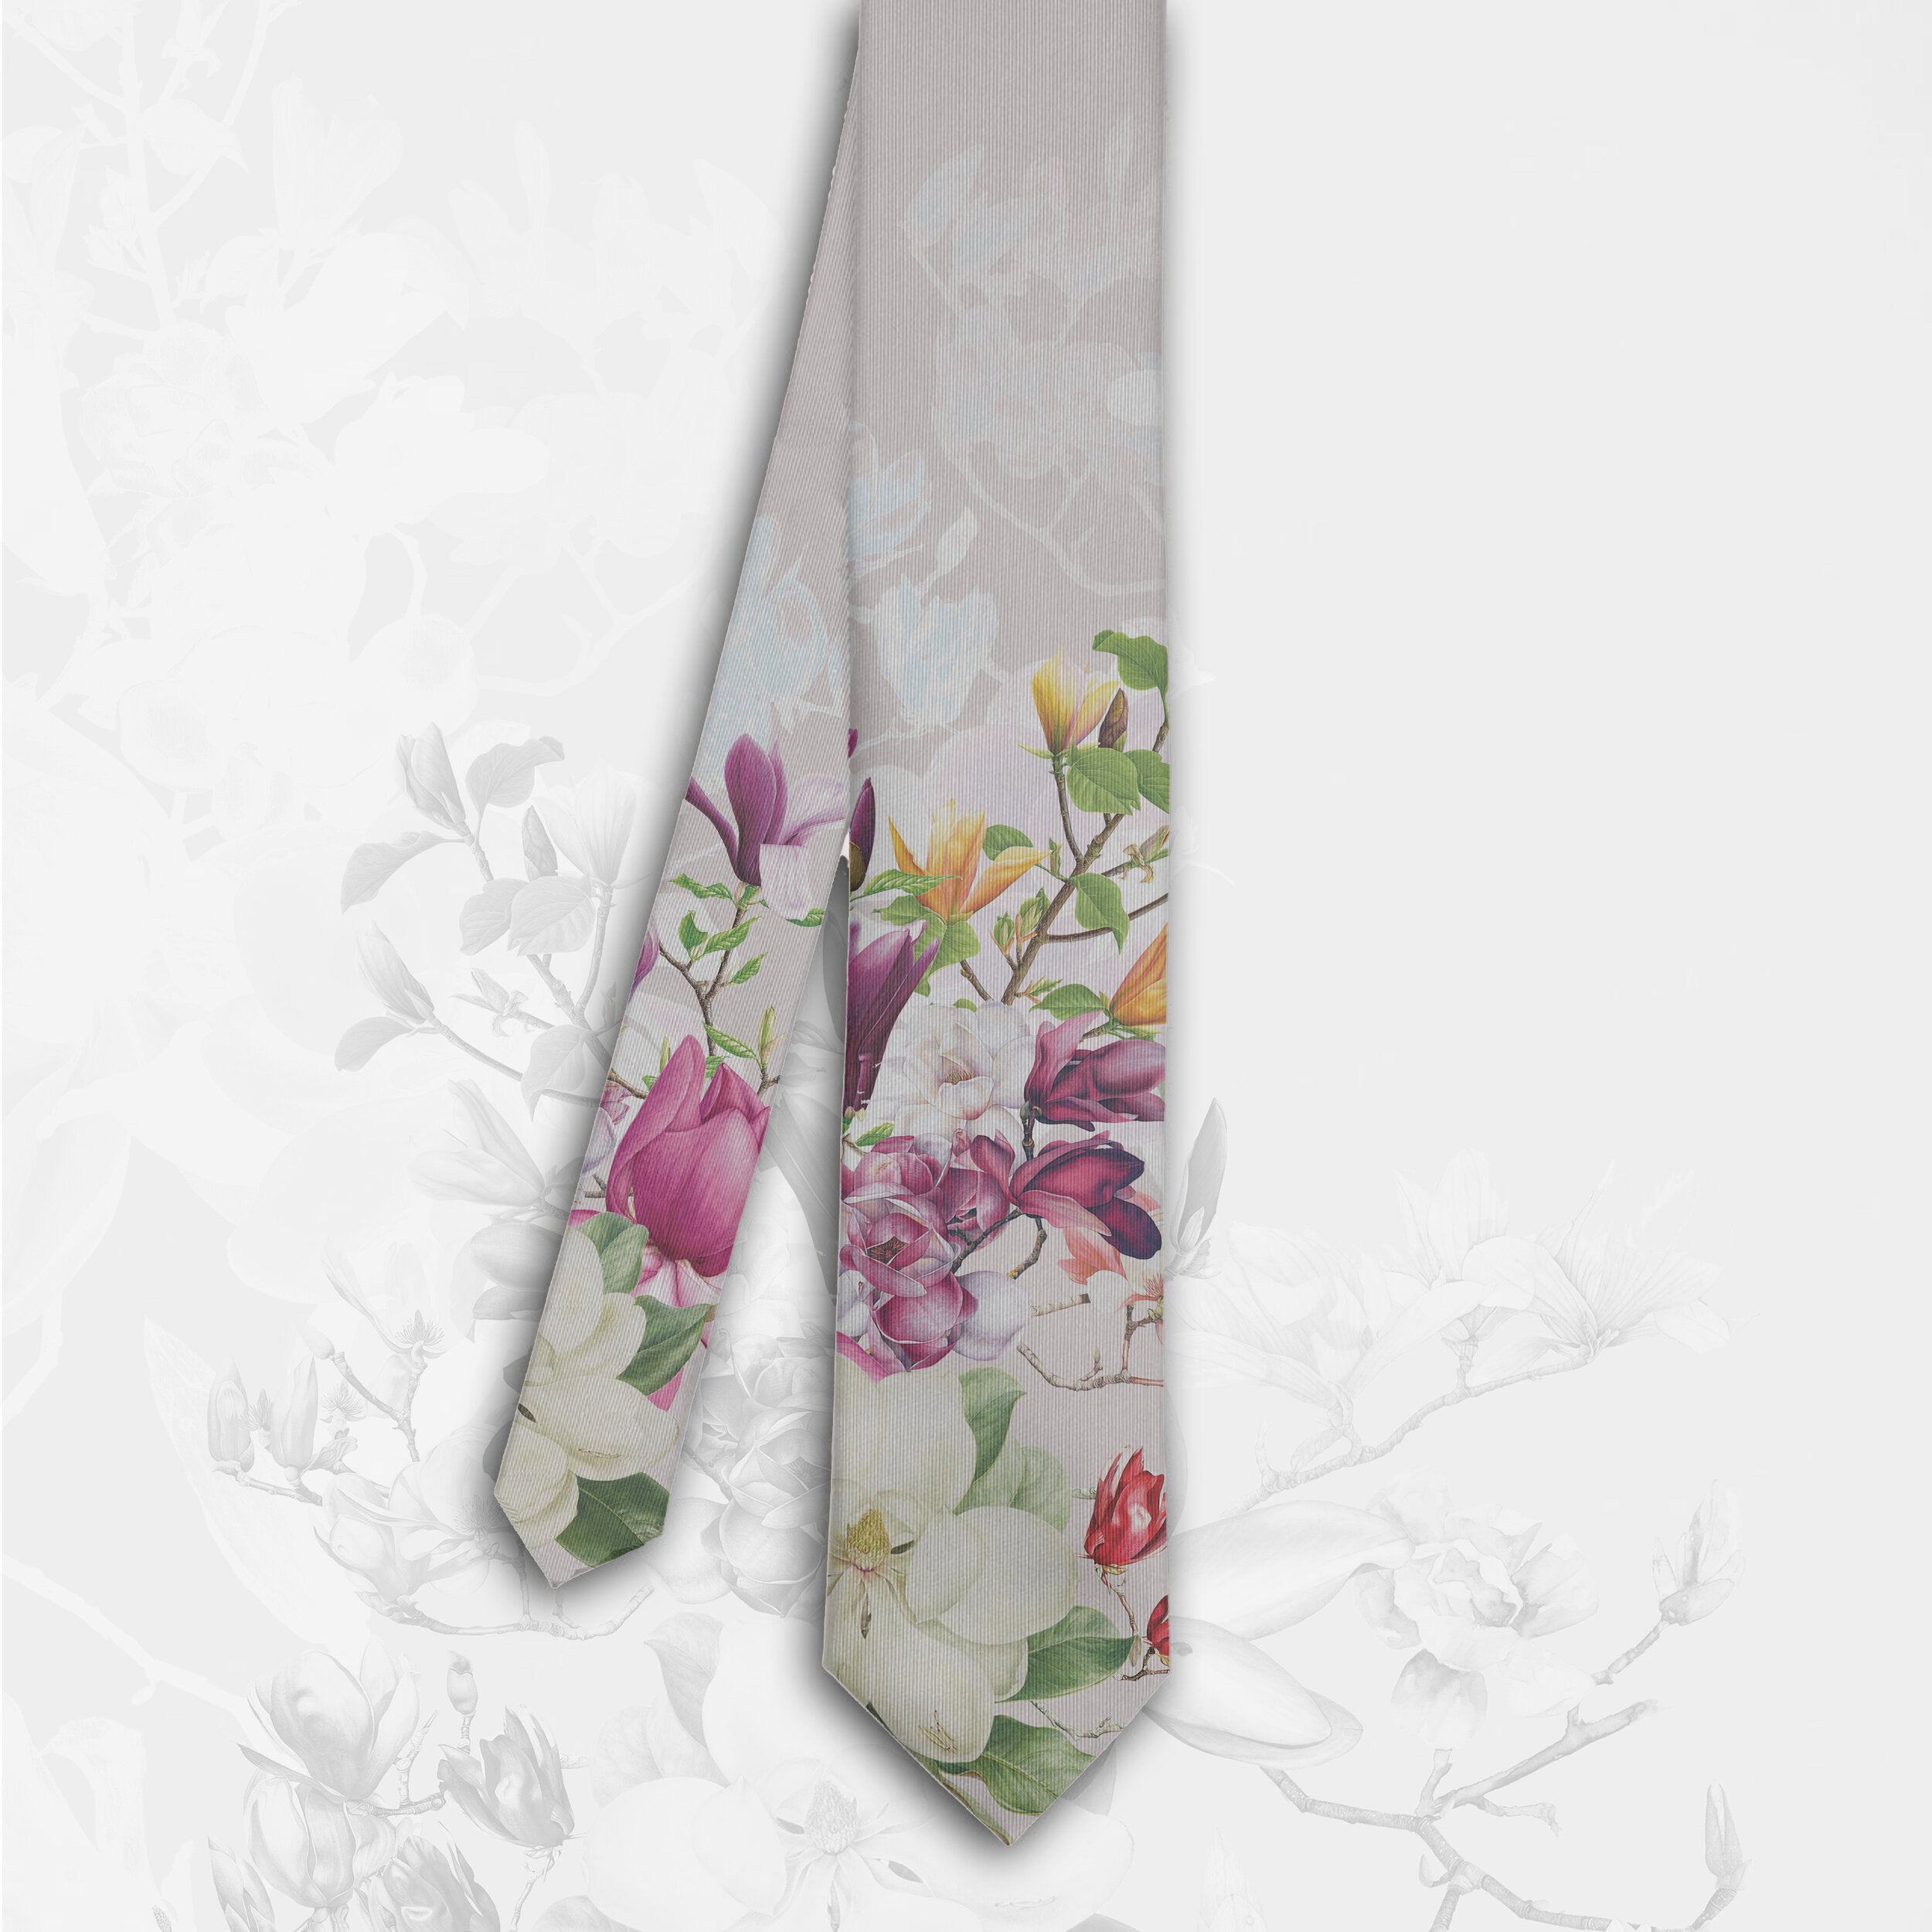 Magnolia Tie.jpg